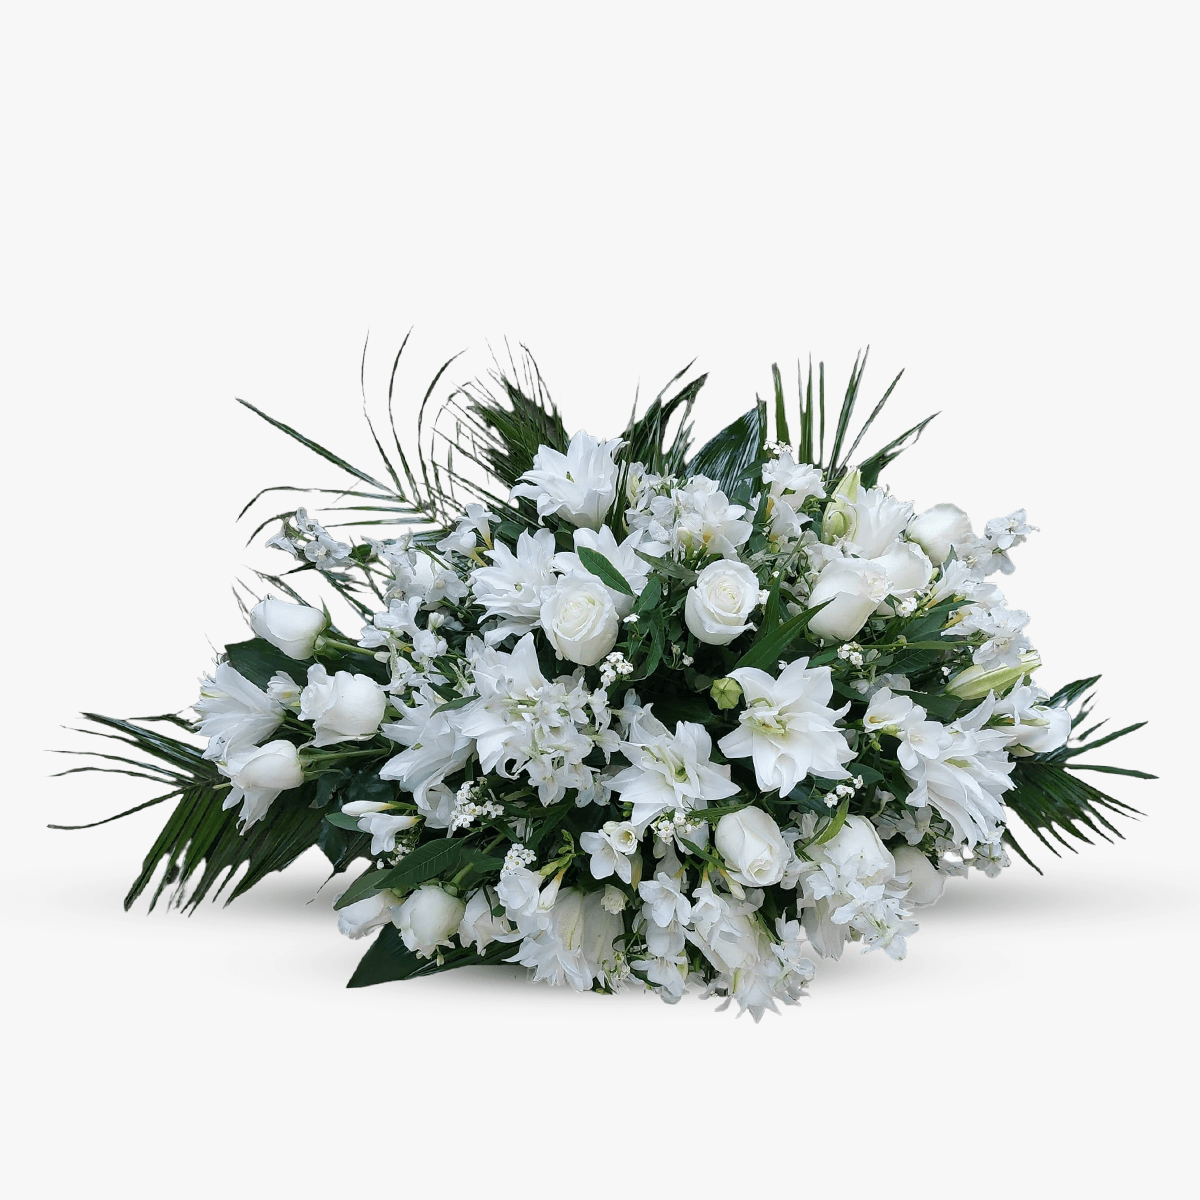 Aranjament funerar Alb Simplu cu 15 trandafiri albi, 5 crin alb, 10 frezii albe, 3 wax alb, 5 mathiolla alba